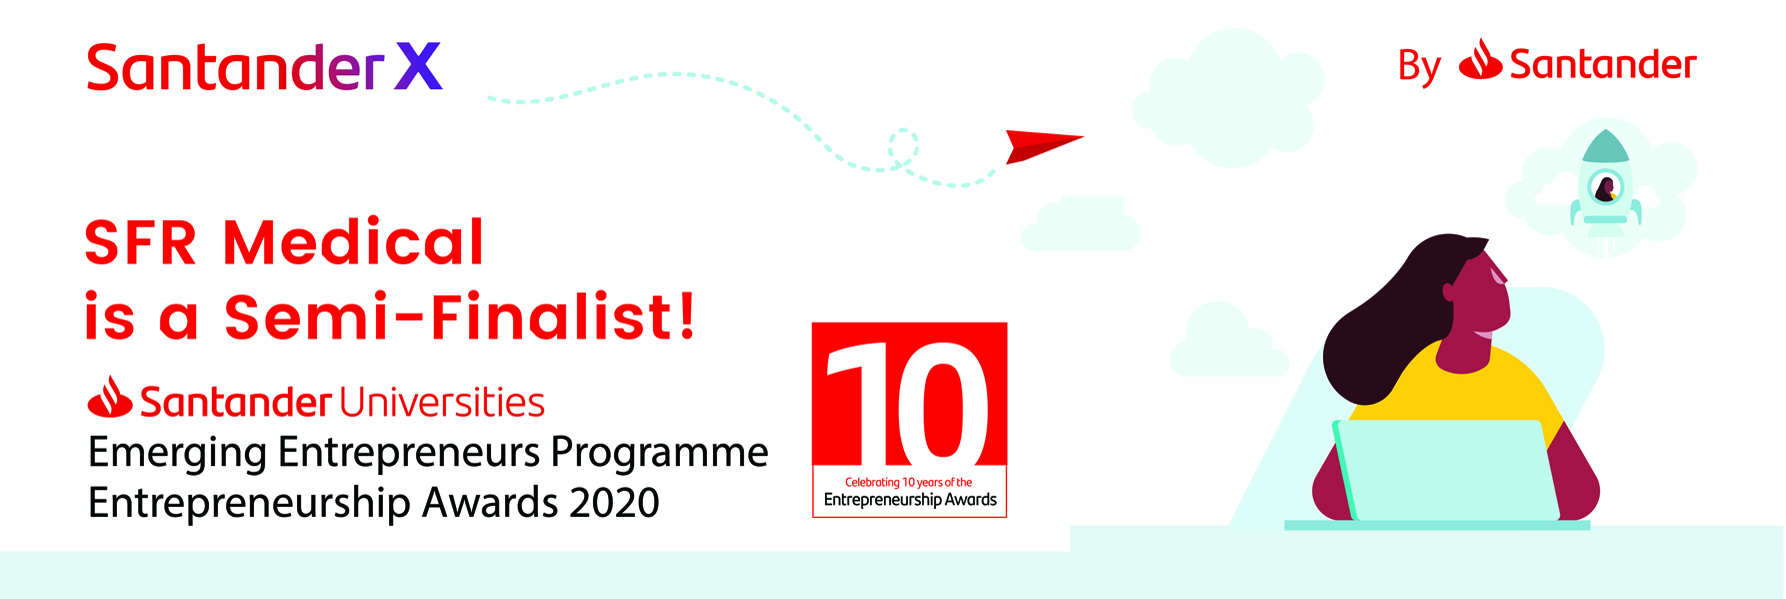 Santander universities emerging entrepreneurs programme 2020